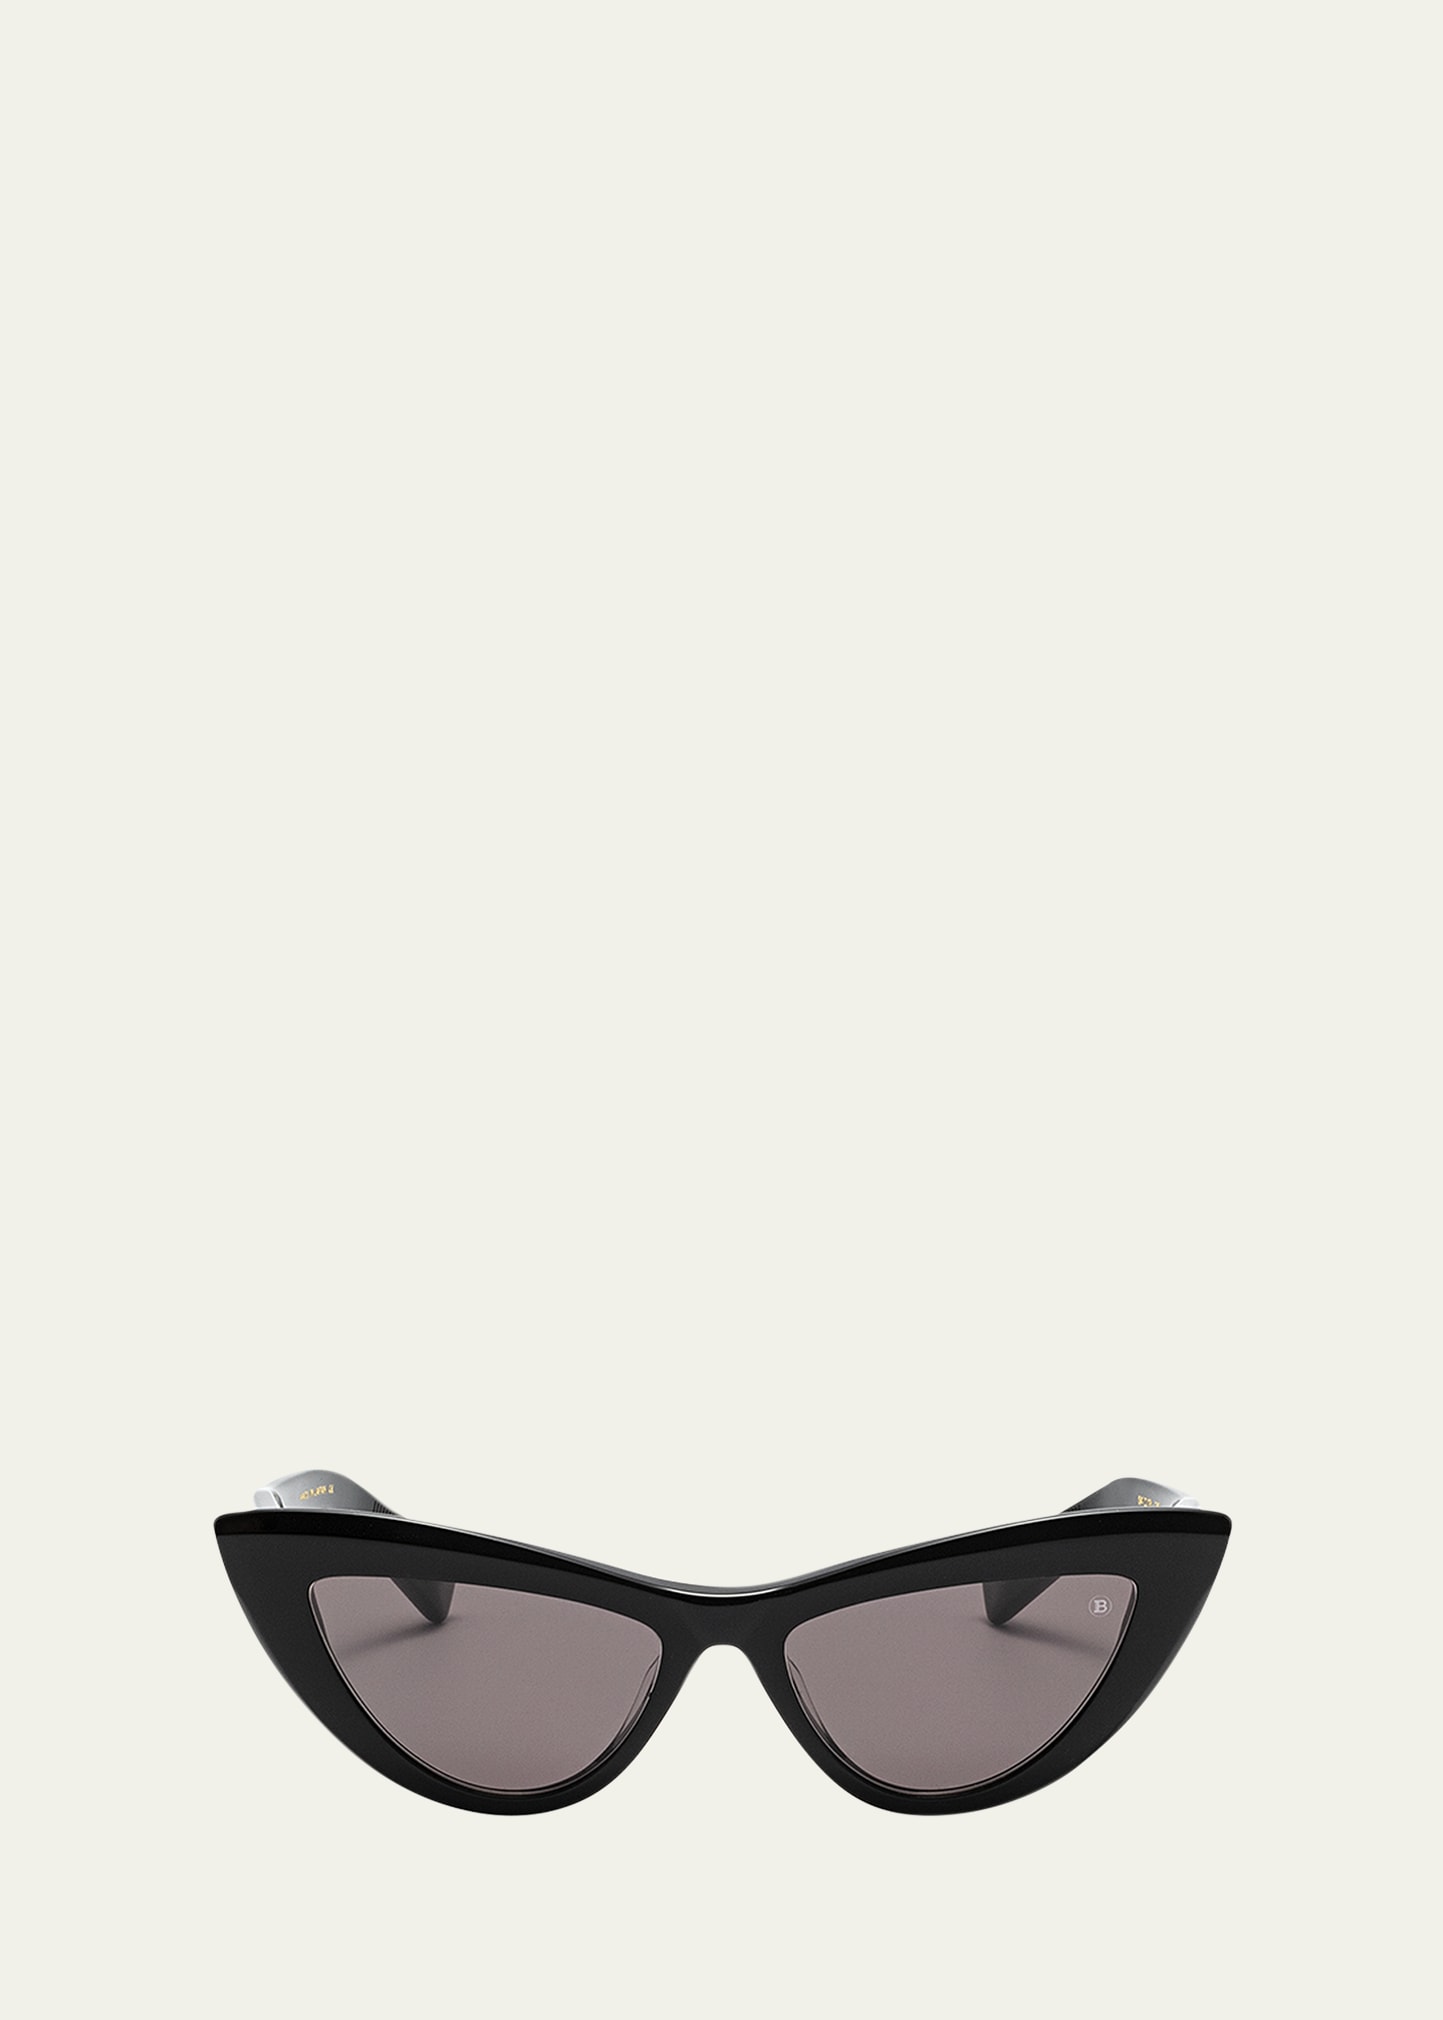 Balmain Jolie Sunglasses In Gld-blk